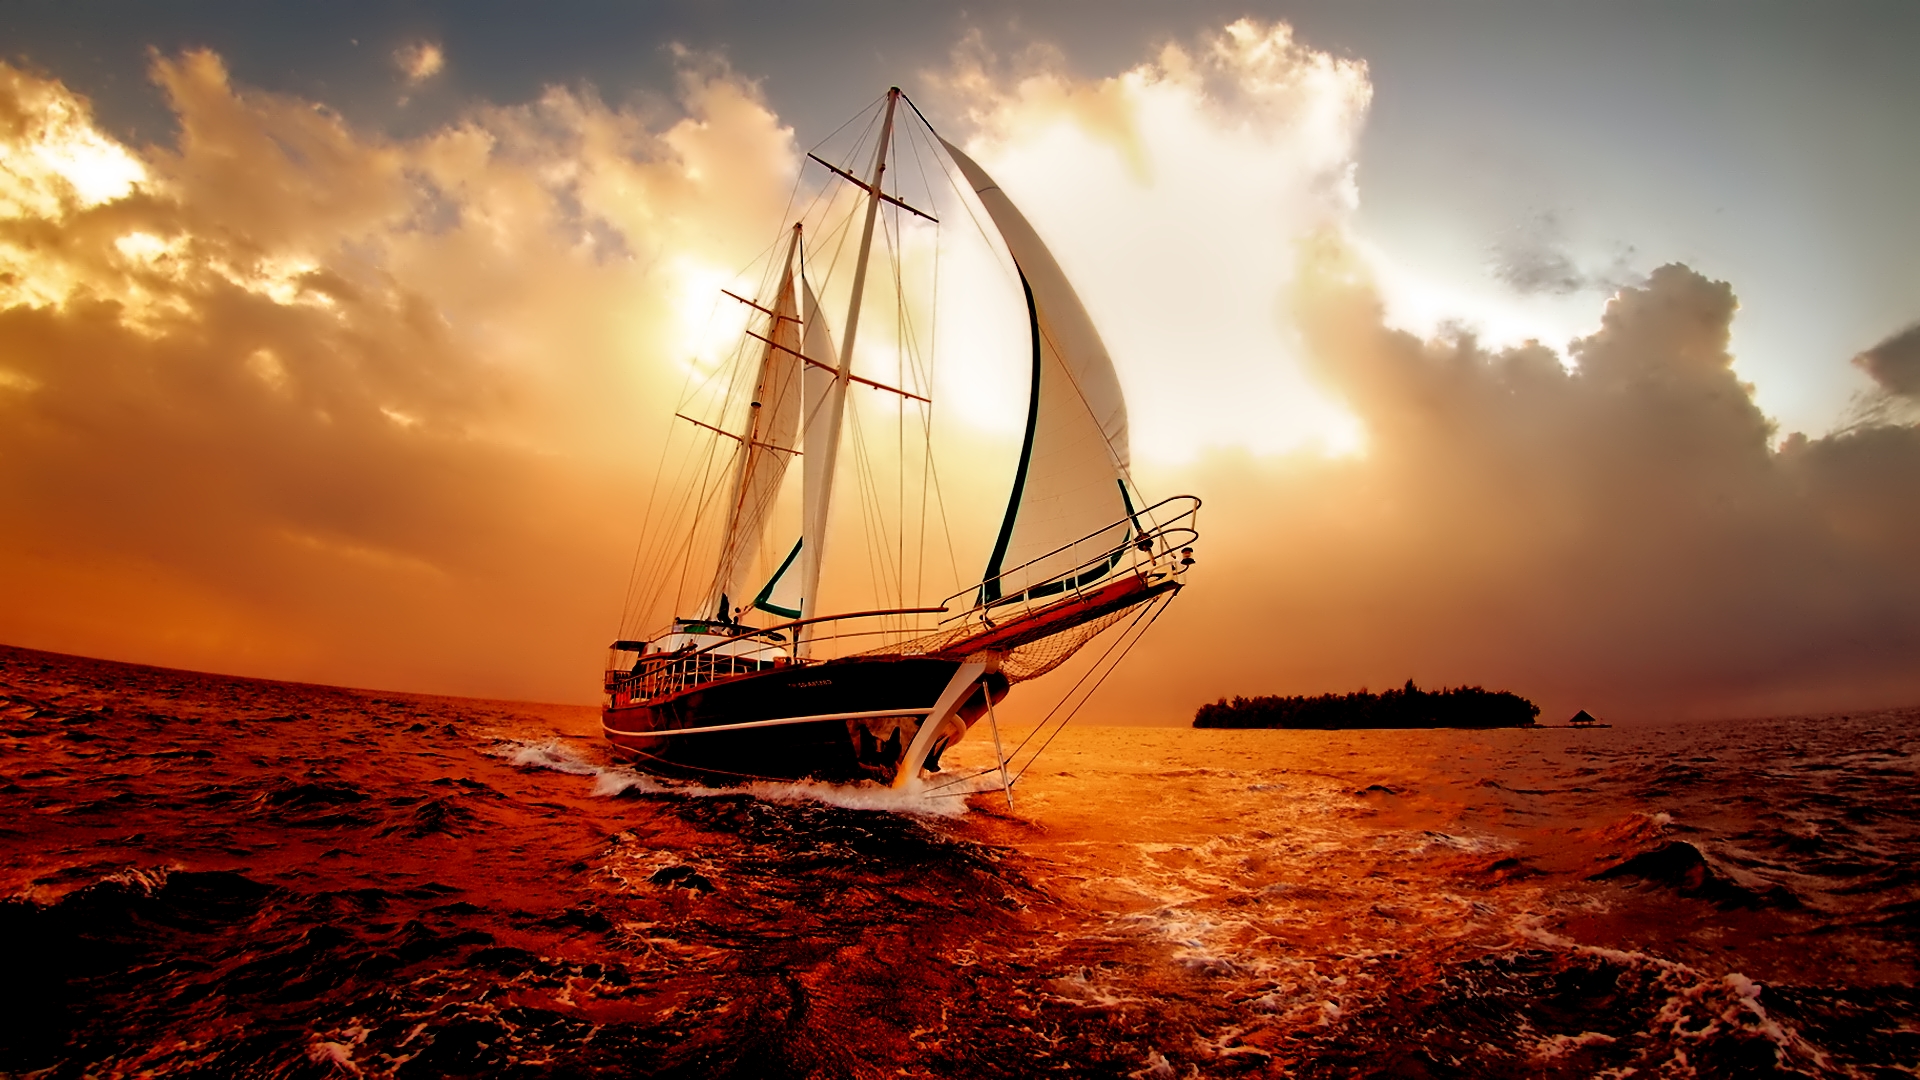 desktop wallpaper,boat,vehicle,sailing,sky,watercraft